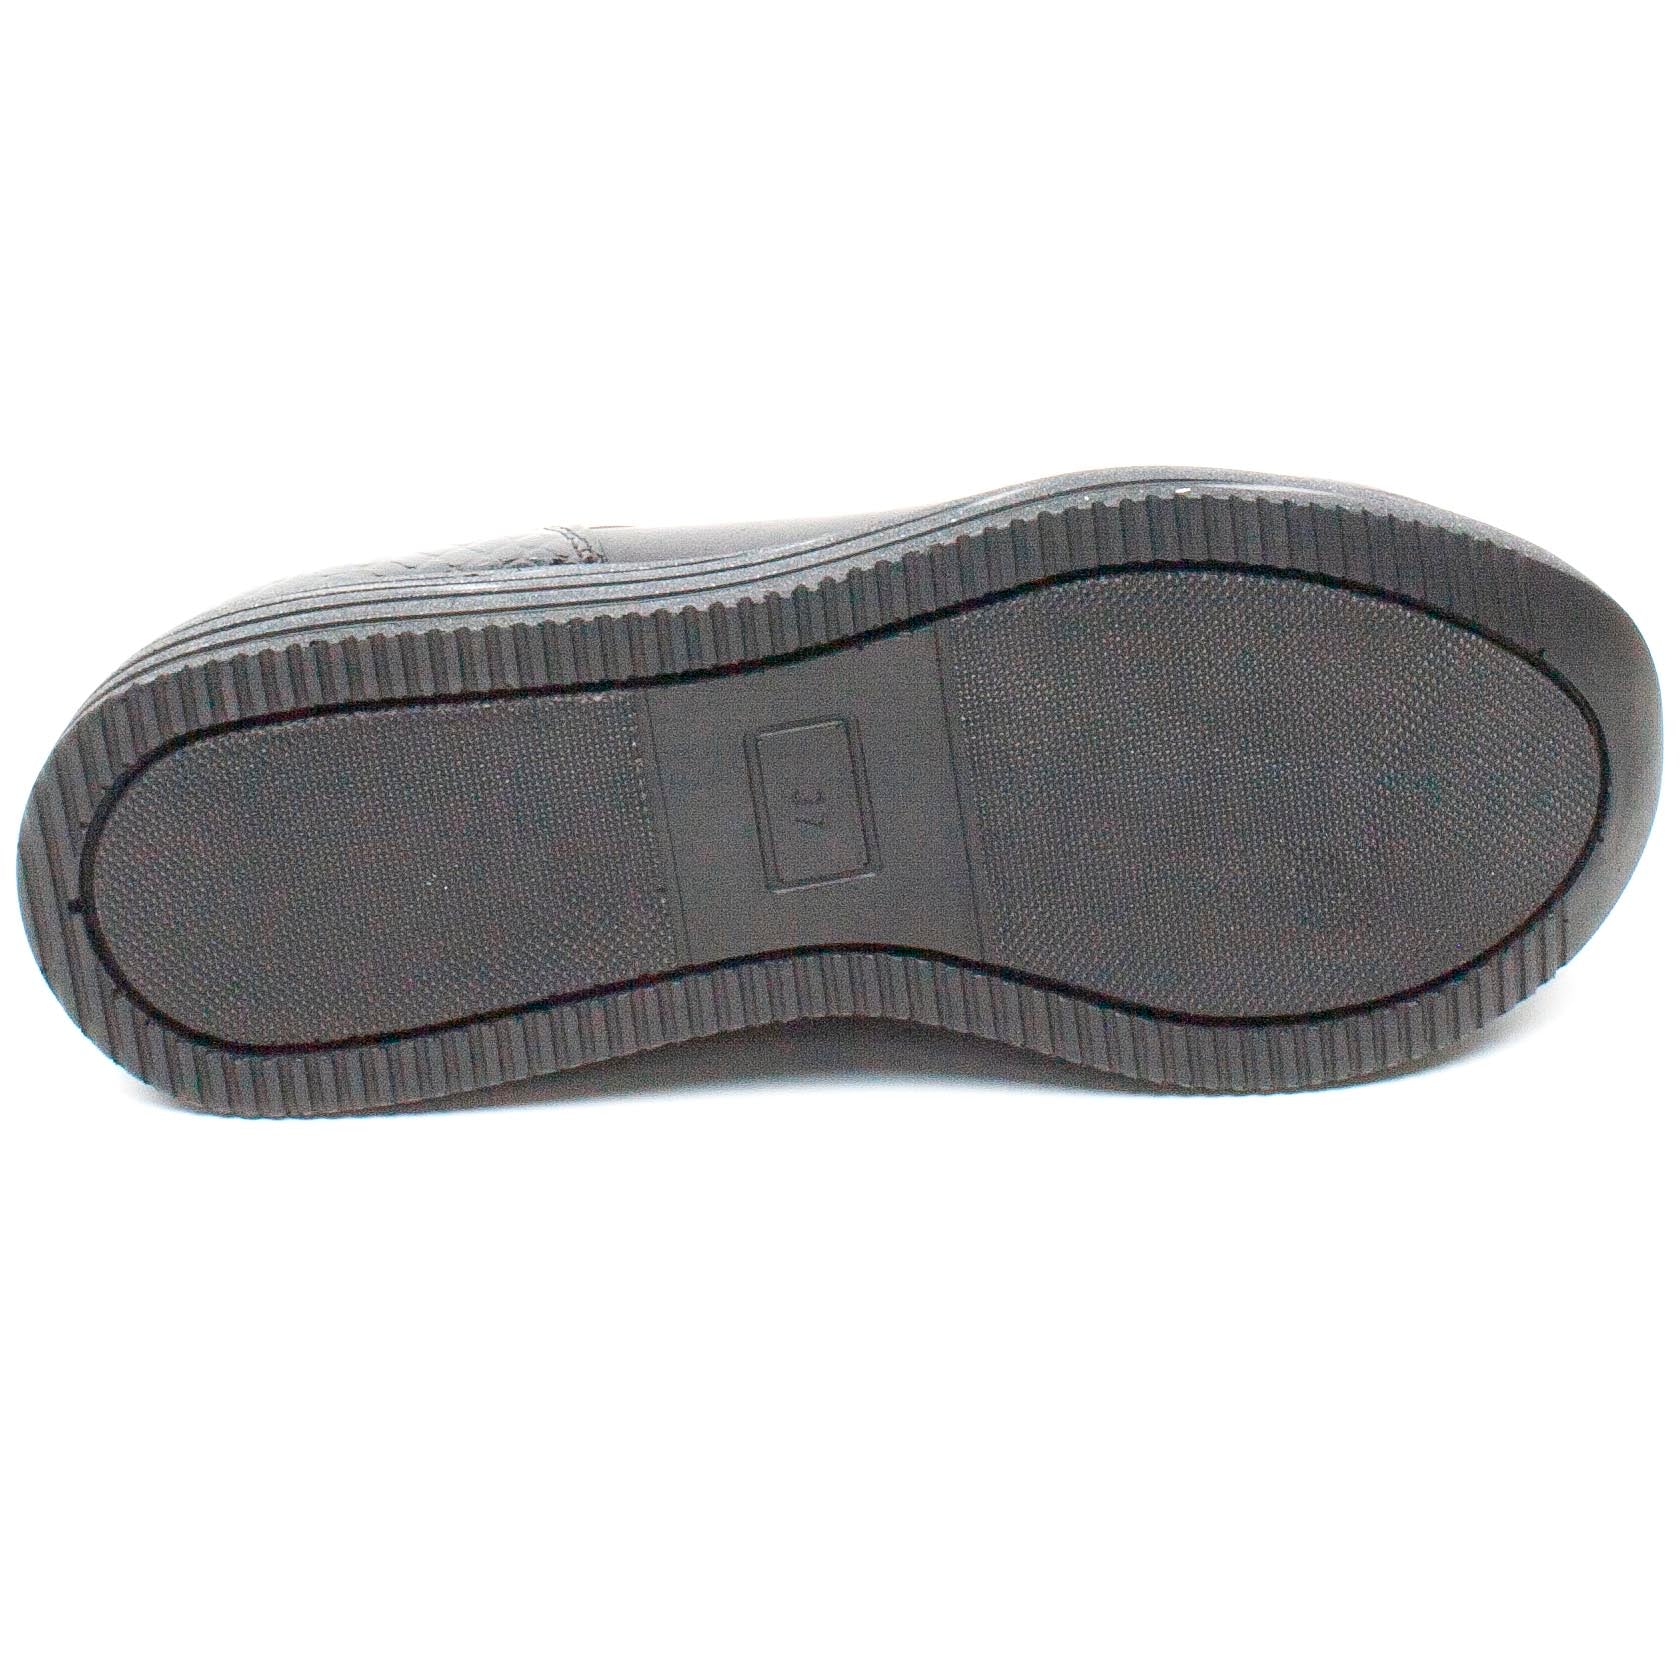 Caspian Pantofi dama 3012(2) negru lac ID1809-NGL